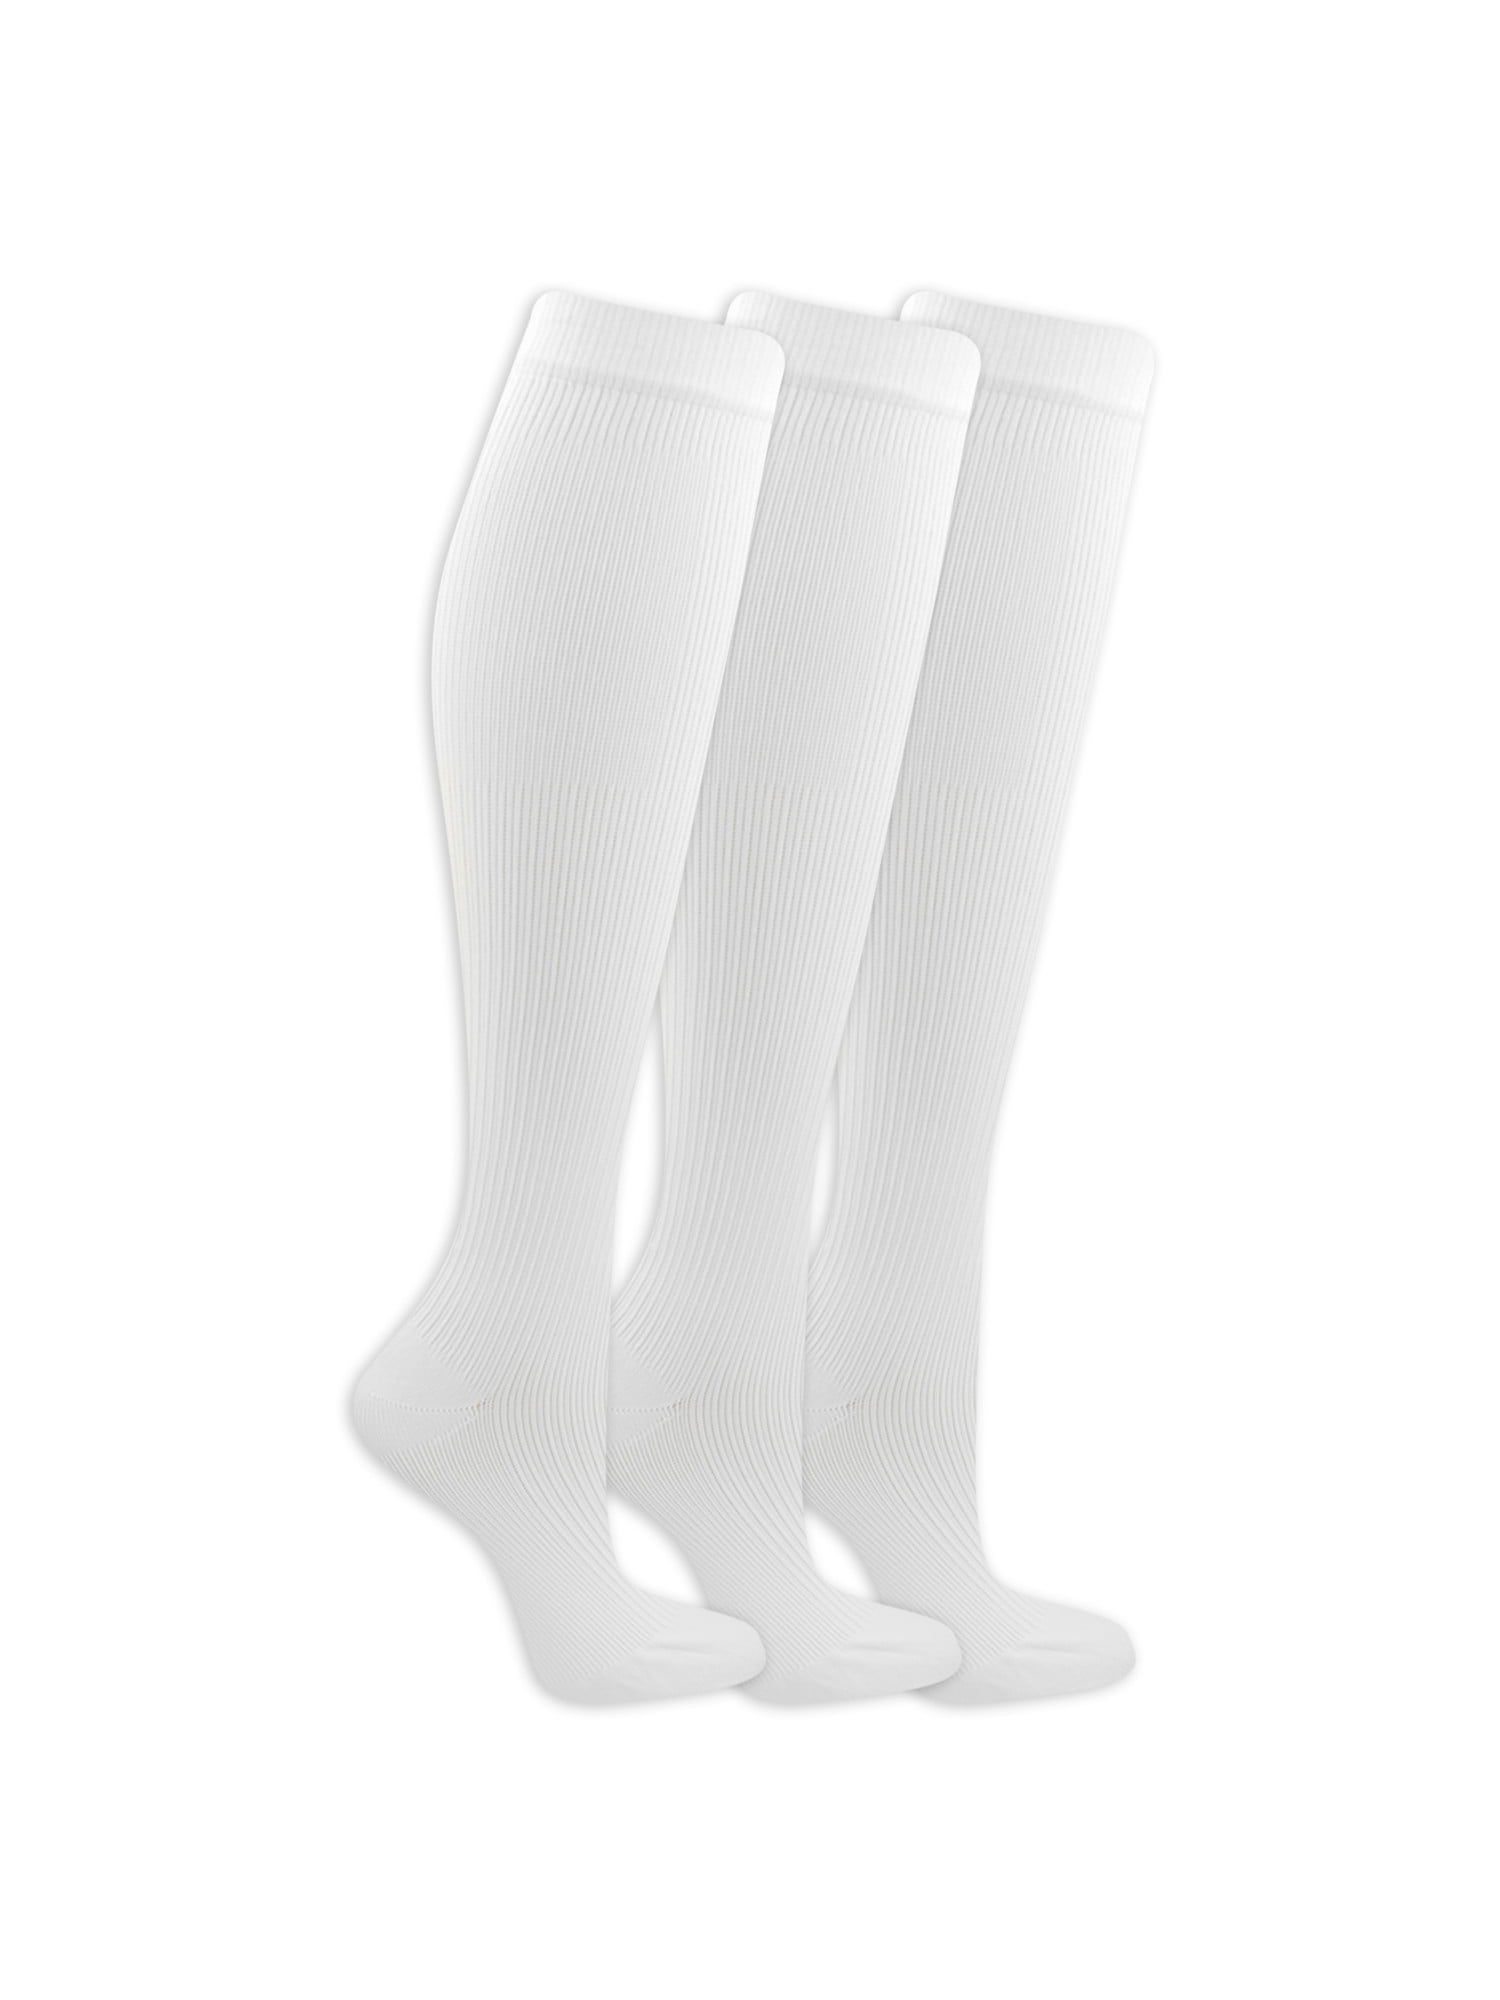 Dr. Scholl's Women's Travel Compression Knee High Socks 3 Pack 